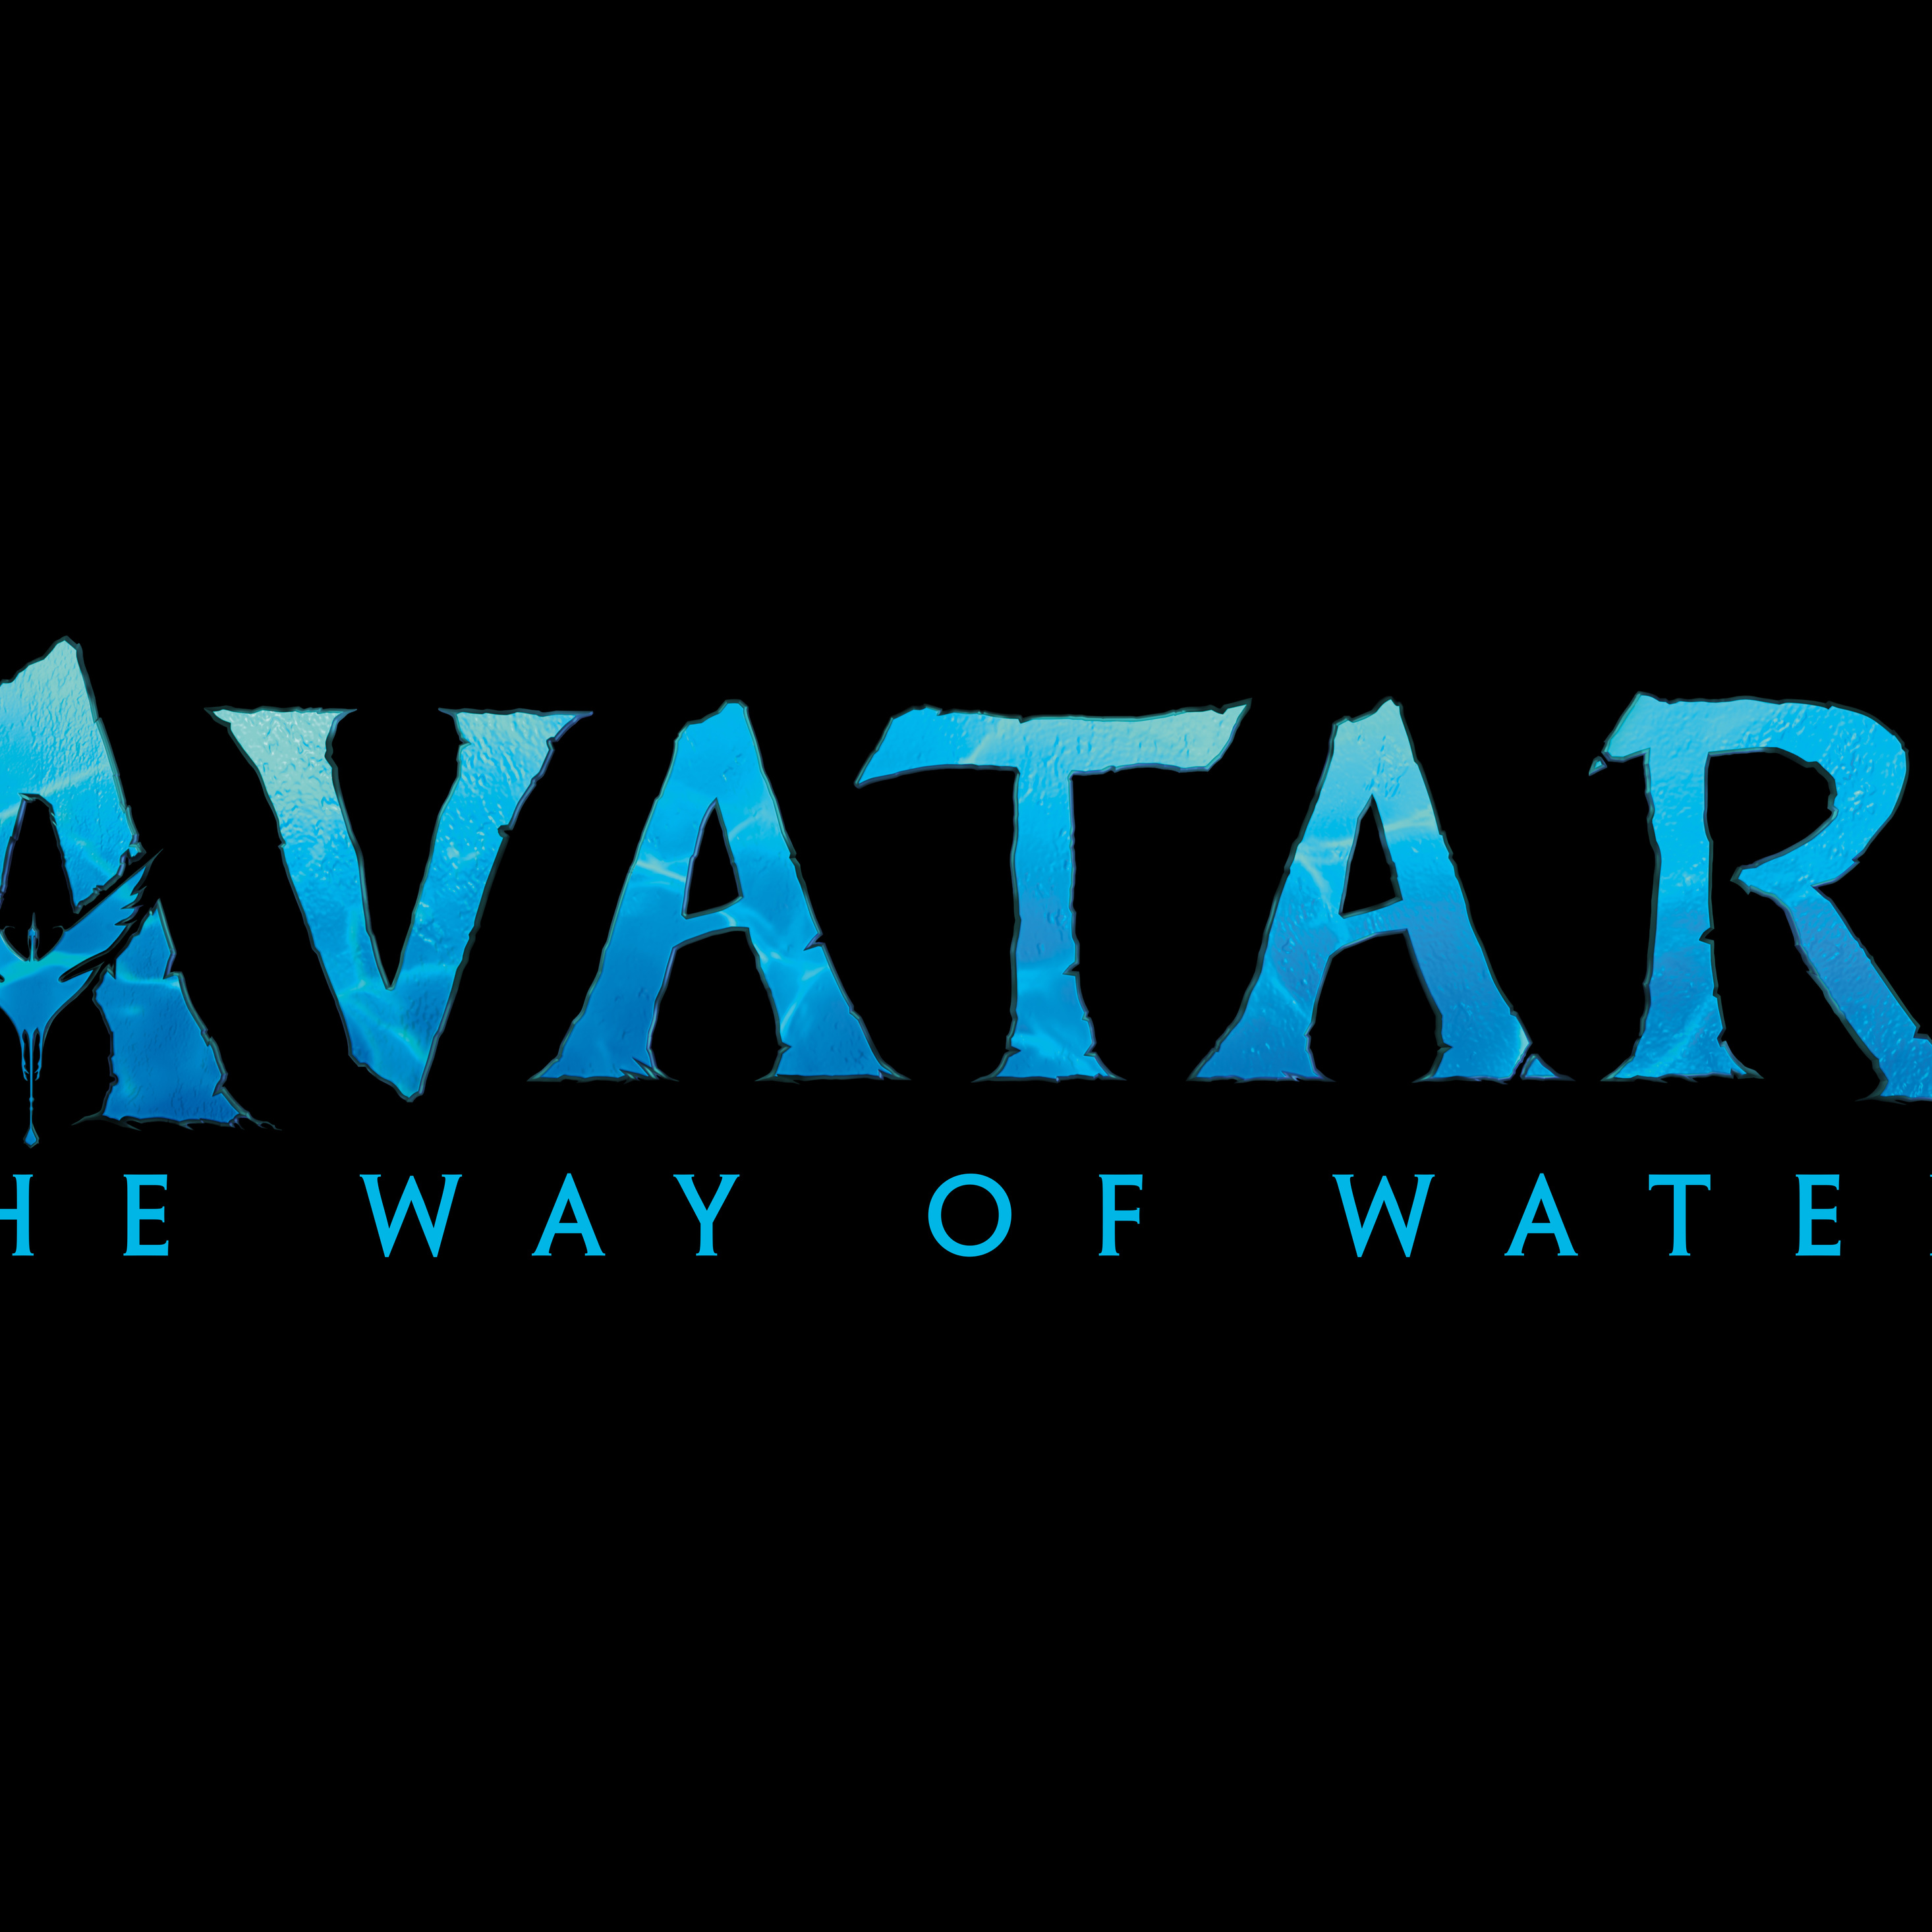 avatar-the-way-of-water-movie-logo-dk.jpg